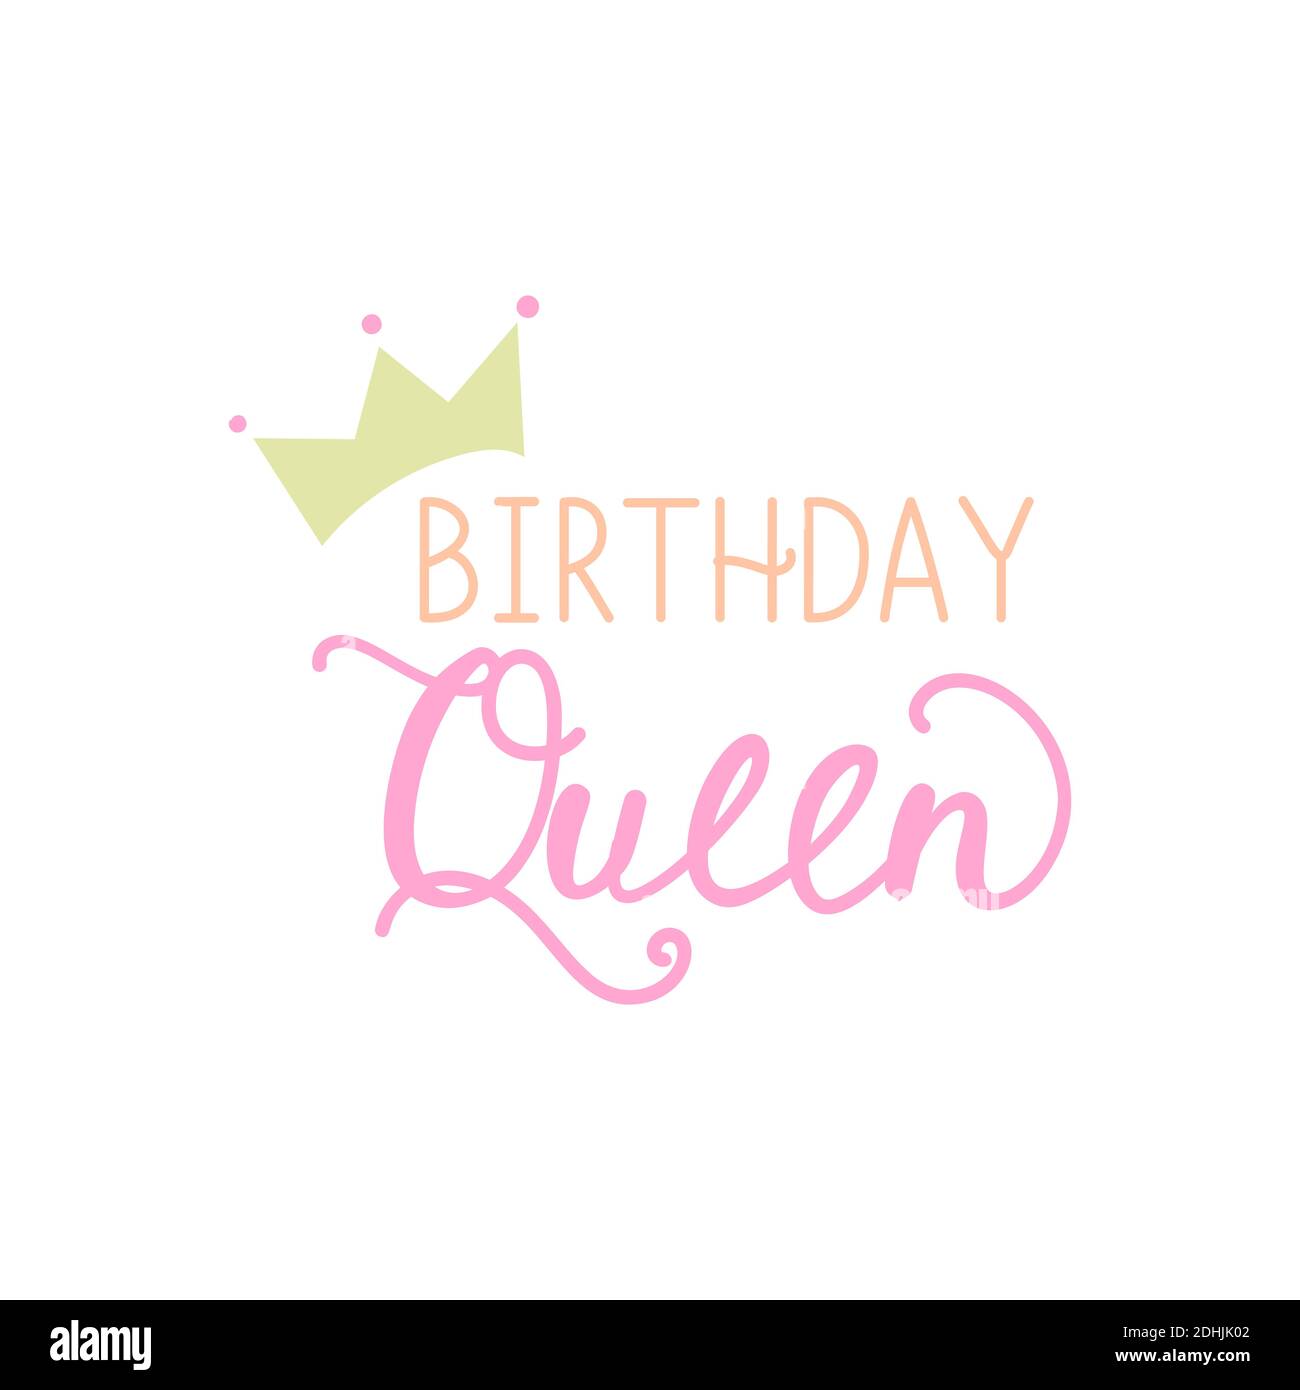 Queen's Birthday Vector Template Design Illustration Stock Vector